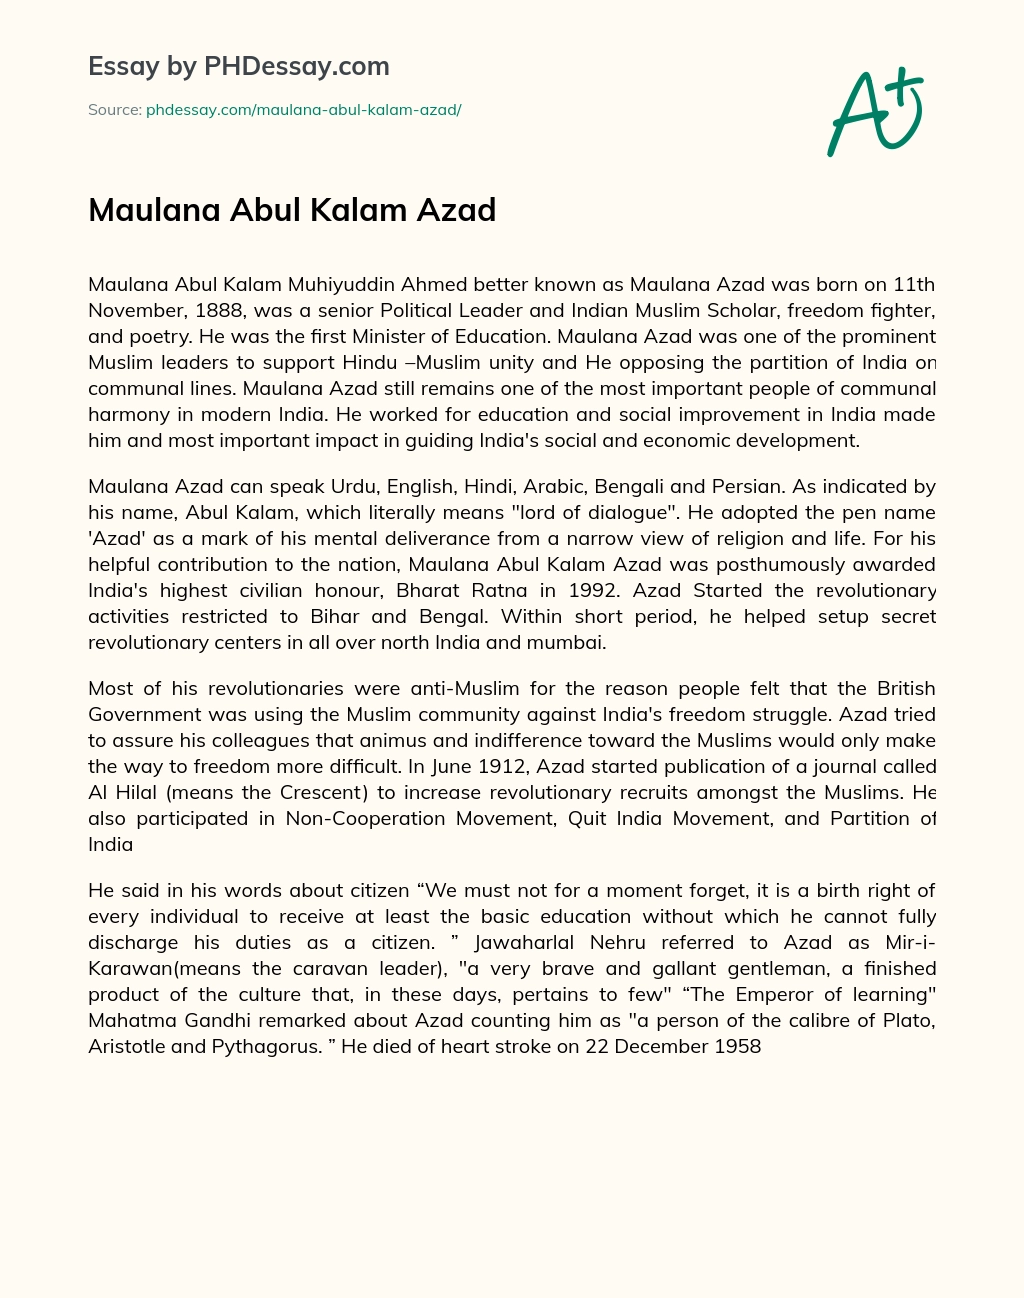 Maulana Abul Kalam Azad essay